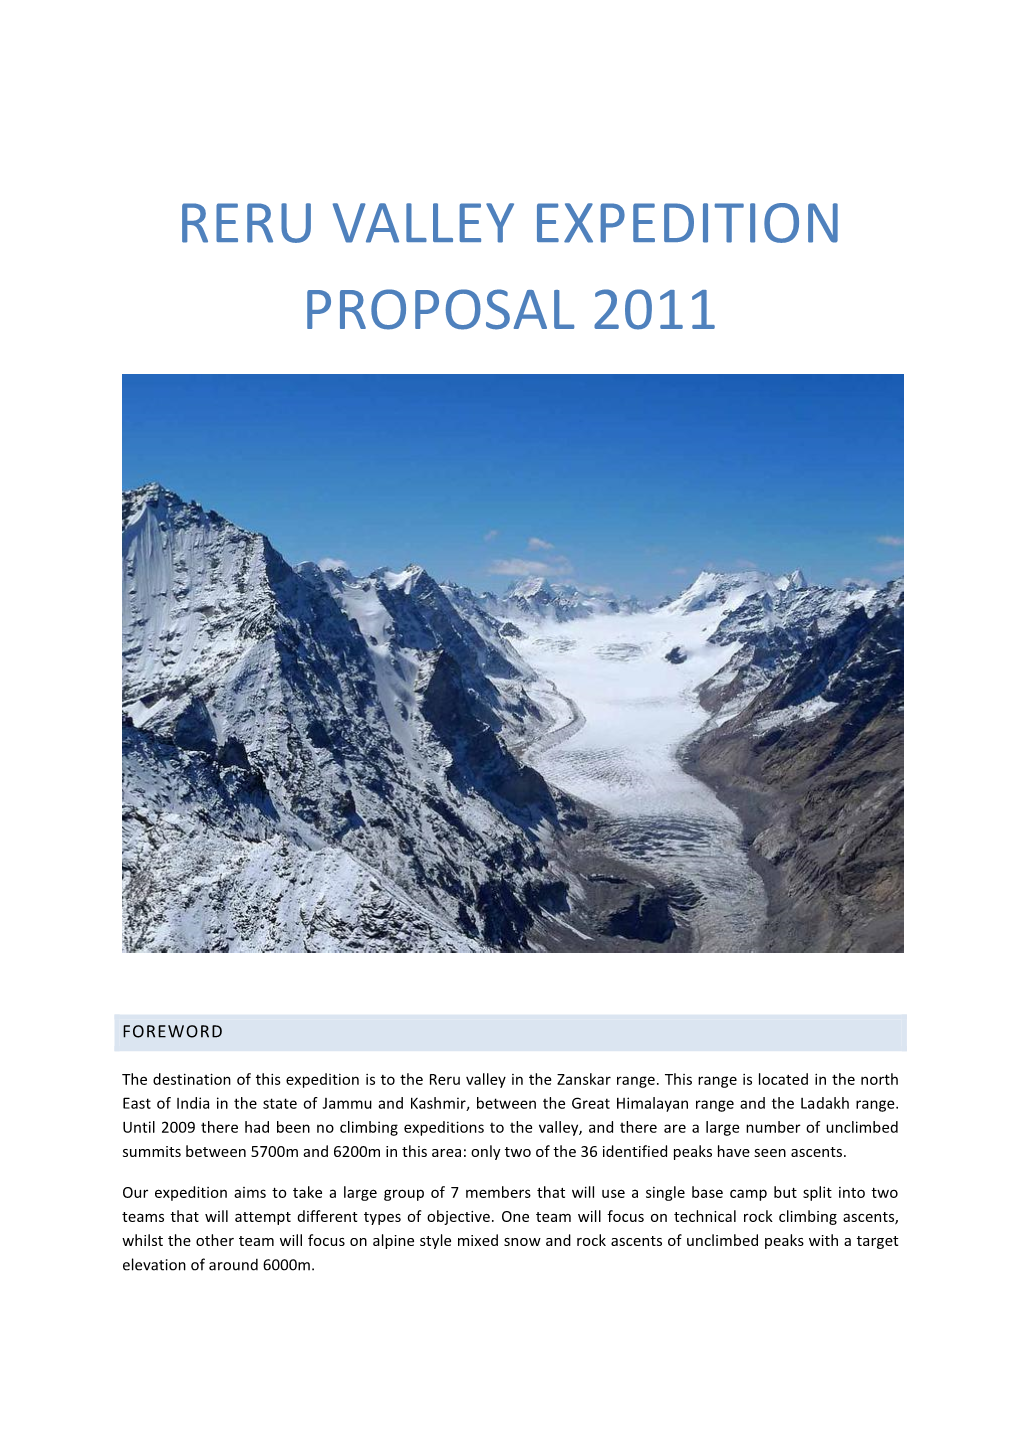 Reru Valley Expedition Proposal 2011